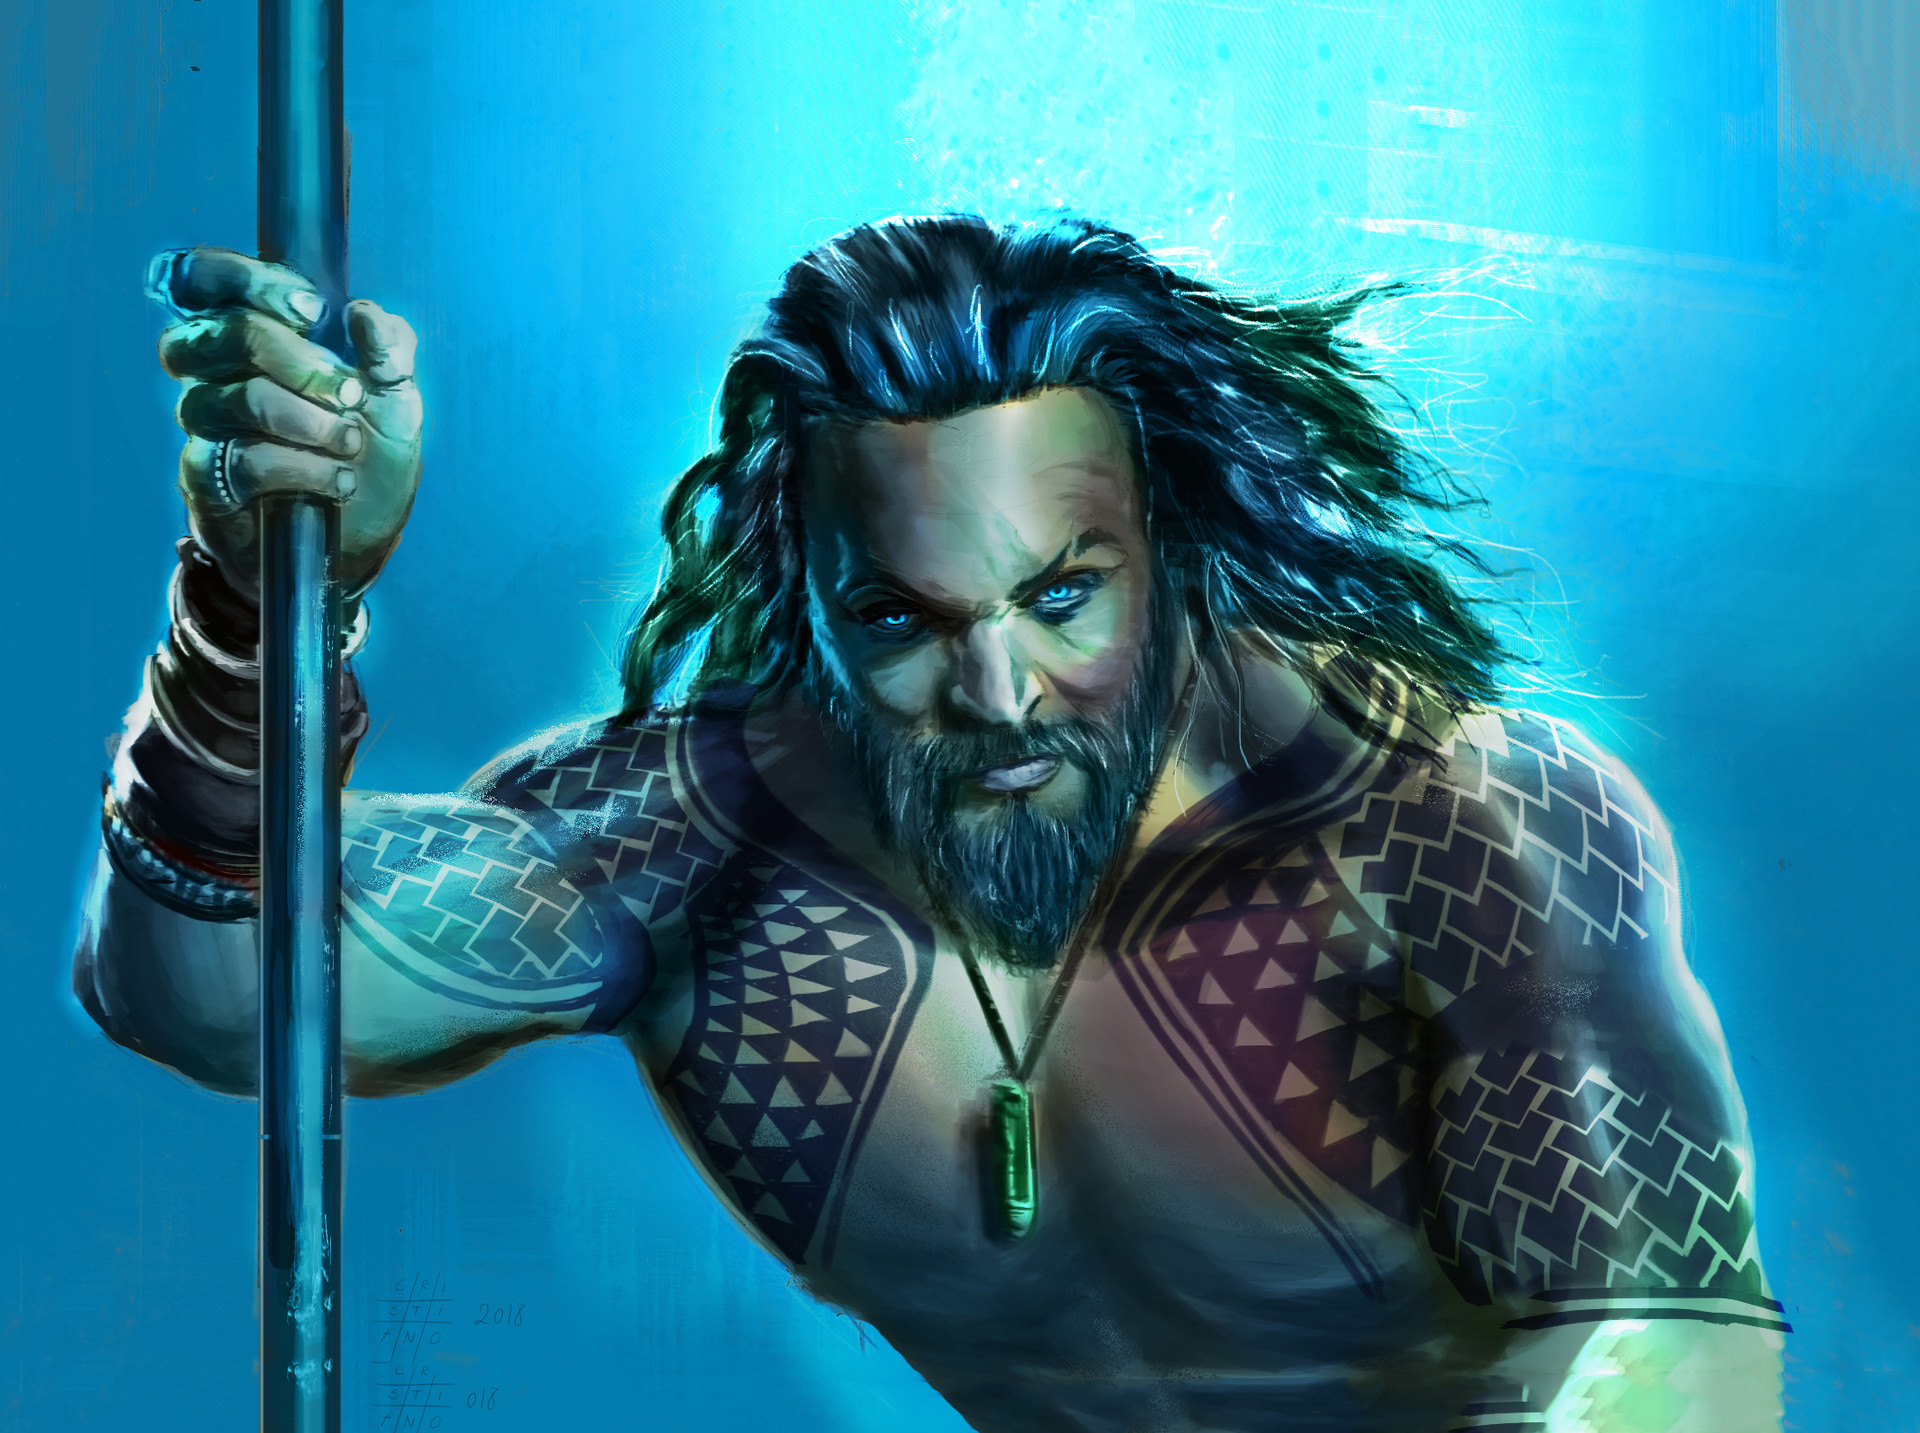 Jason Momoa As Aquaman Art Wallpapers